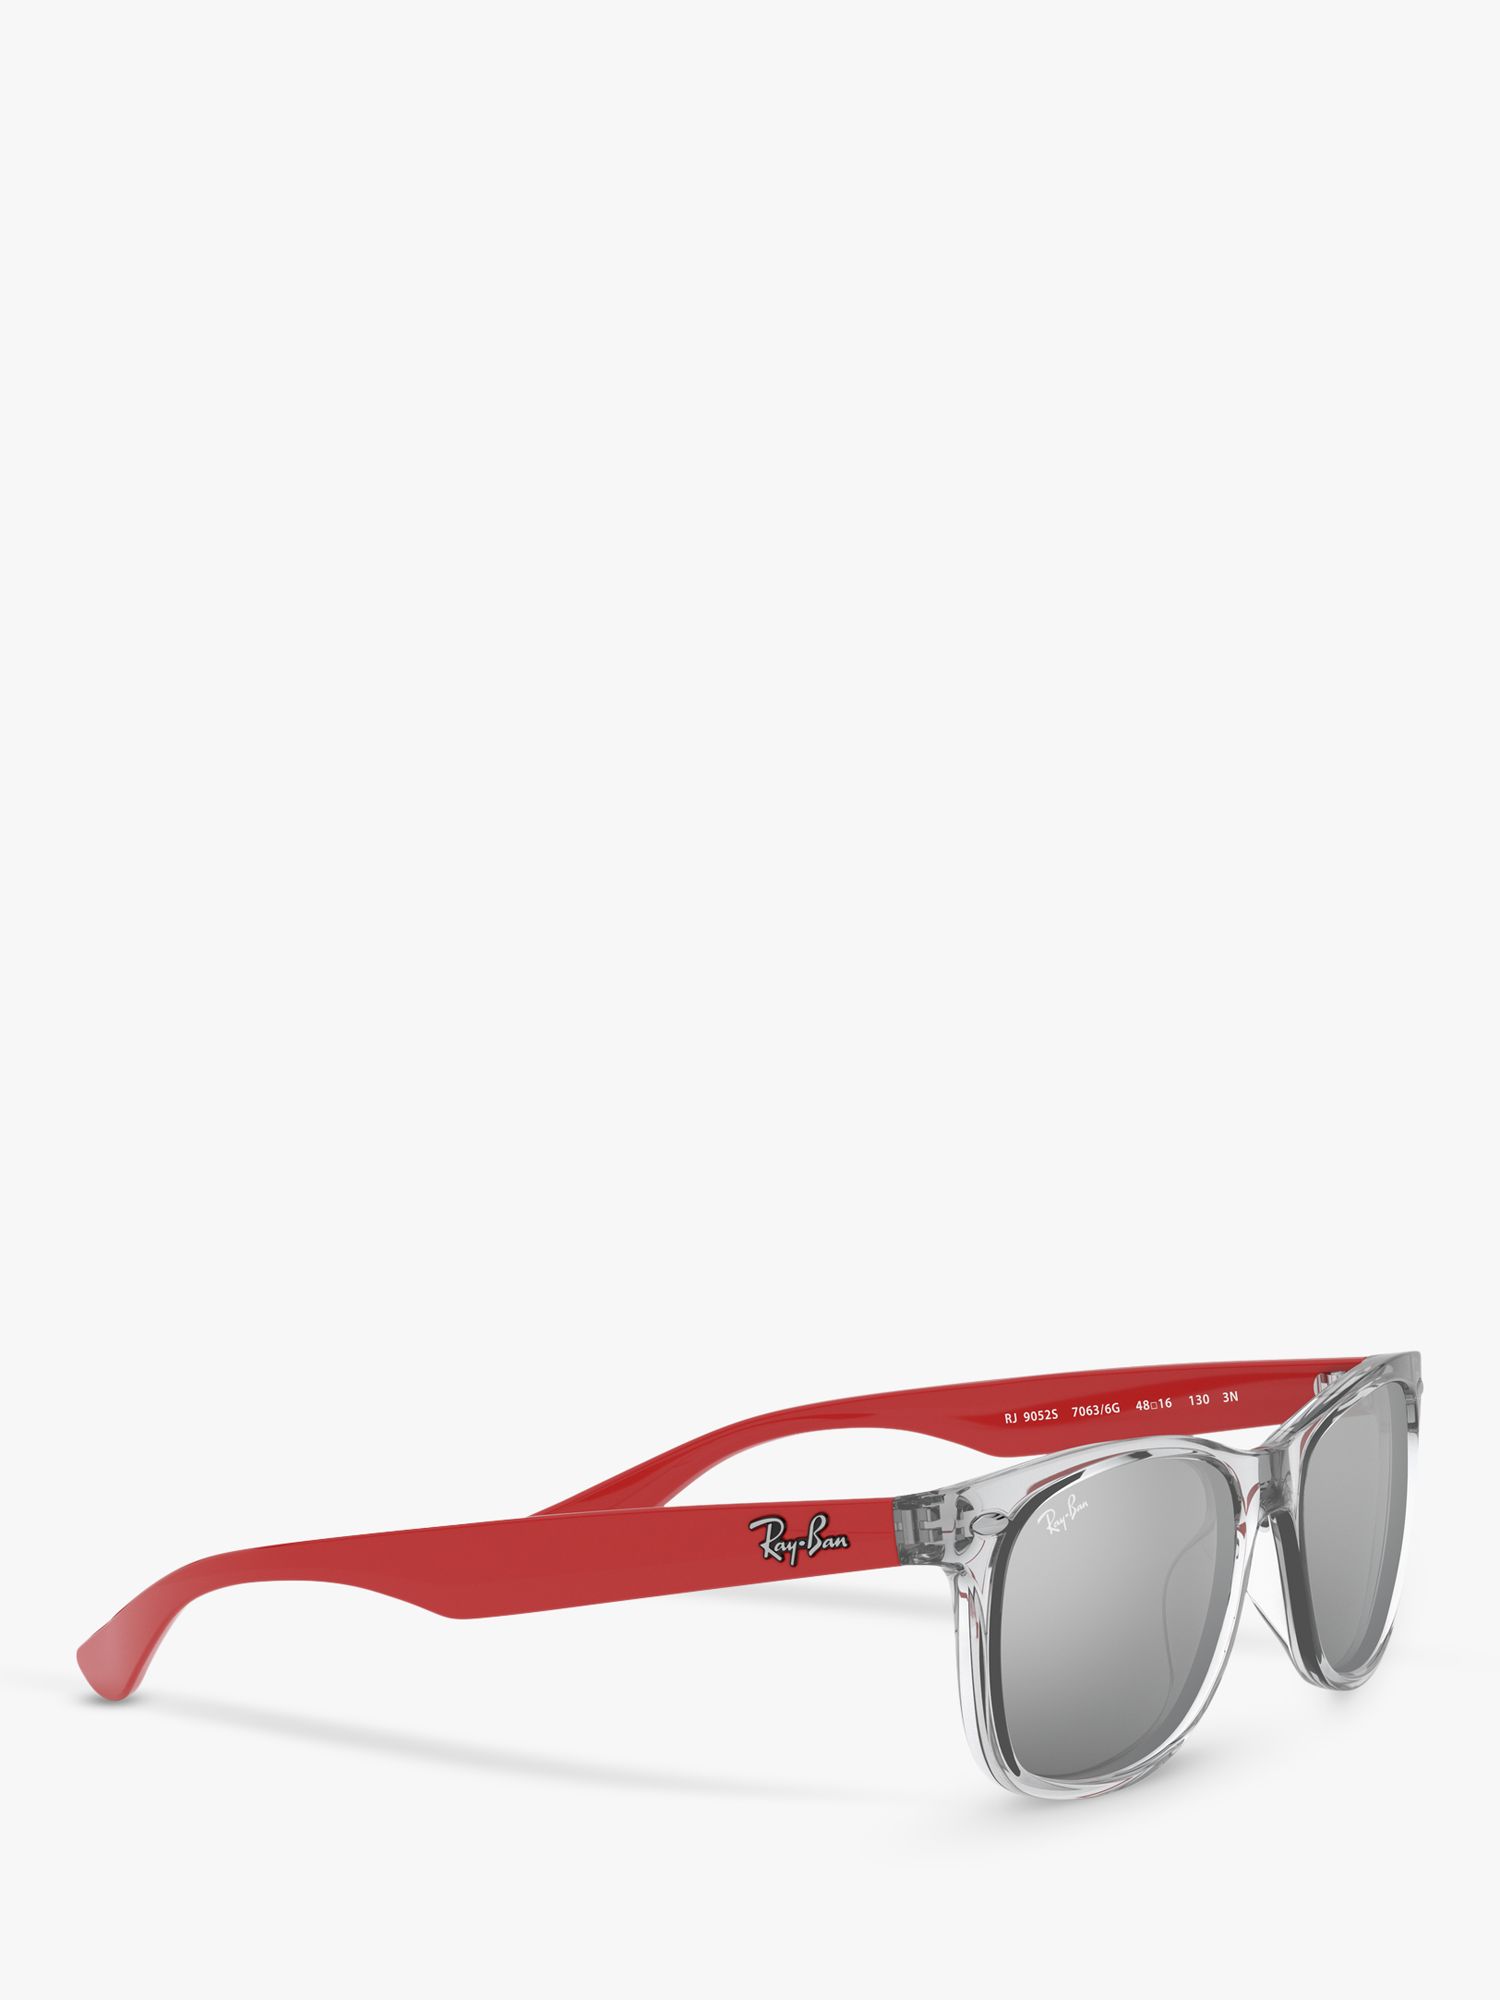 Ray-Ban RJ9052S Kids' Unisex Square Sunglasses, Transparent Grey/Mirror Grey  at John Lewis & Partners